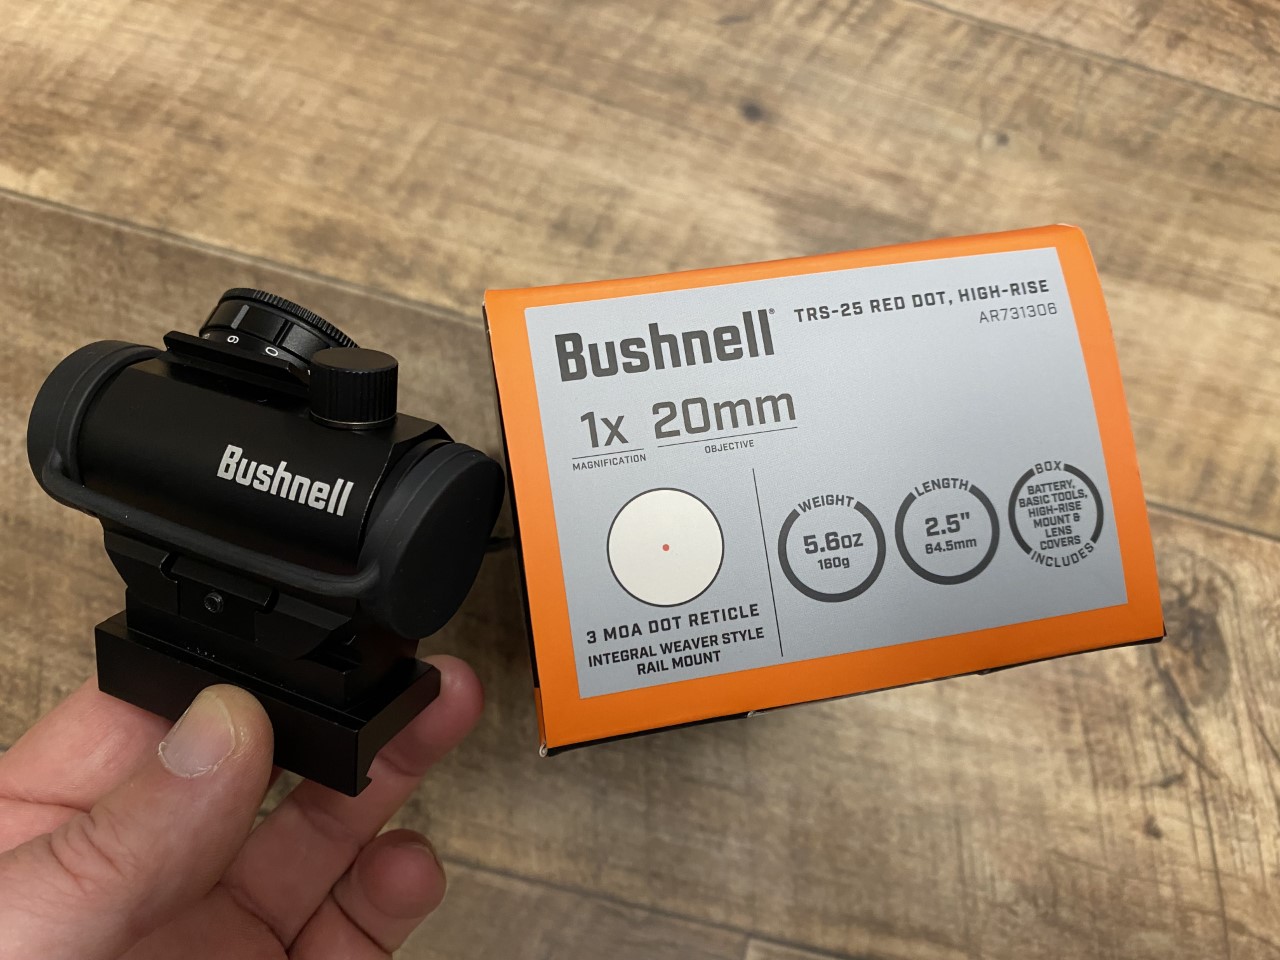 Bushnell TRS-25 Red Dot 1x20